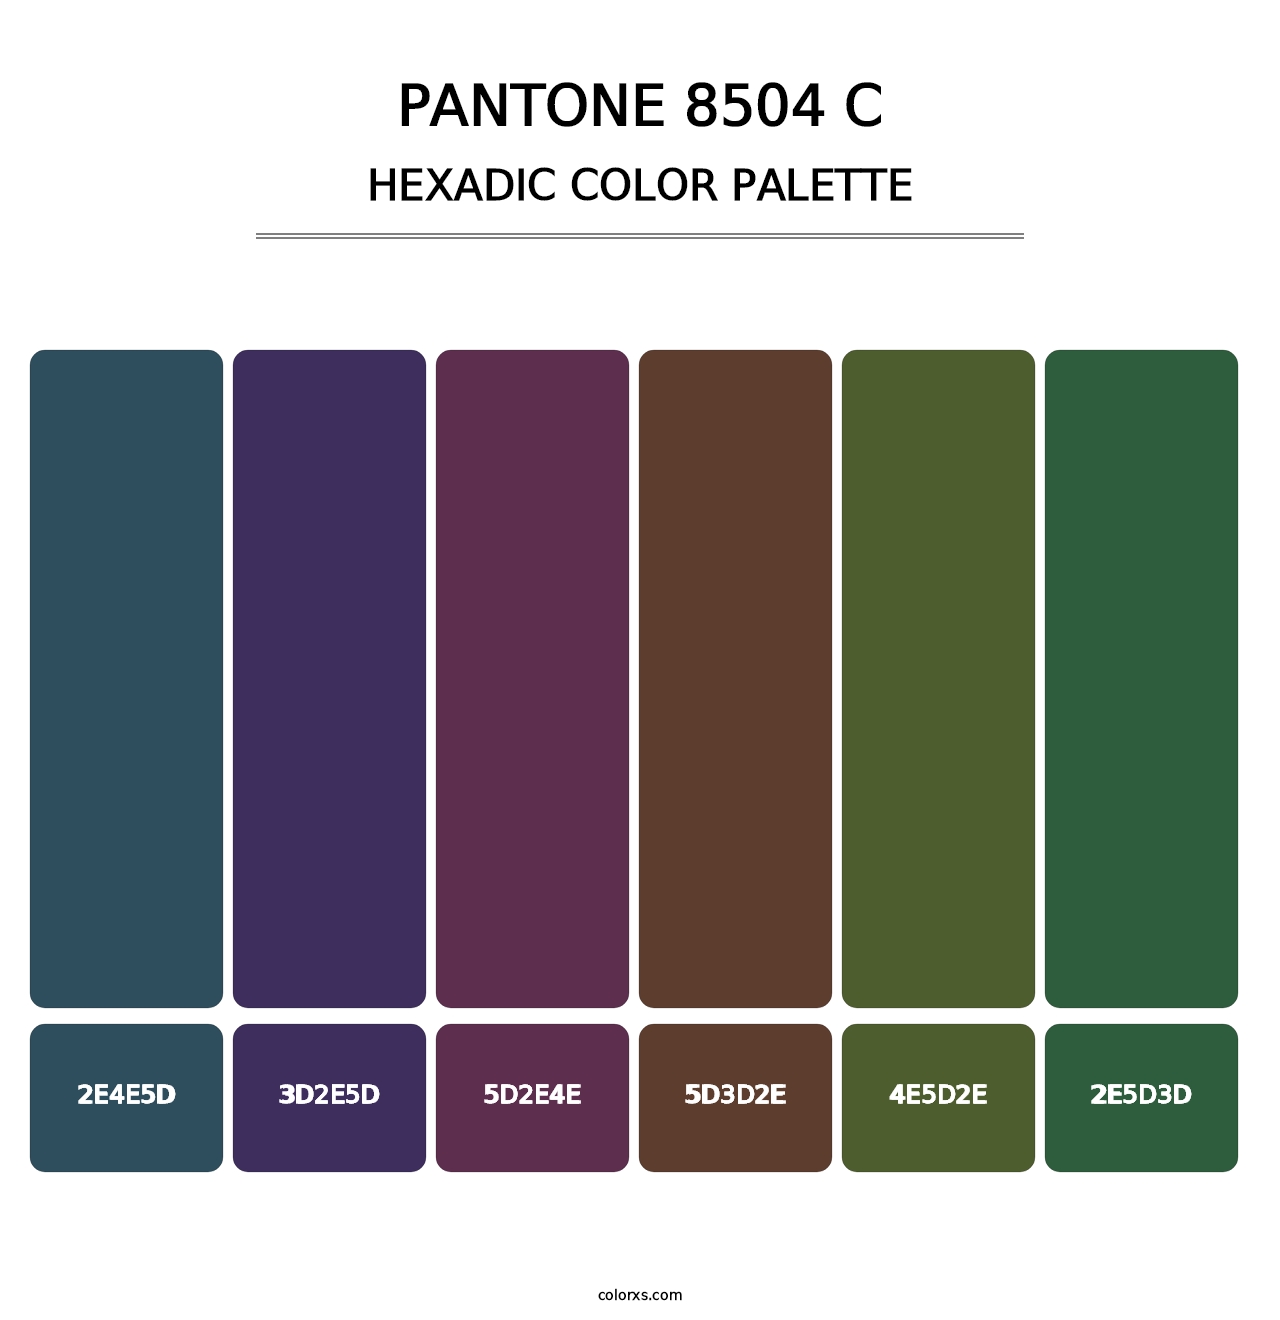 PANTONE 8504 C - Hexadic Color Palette